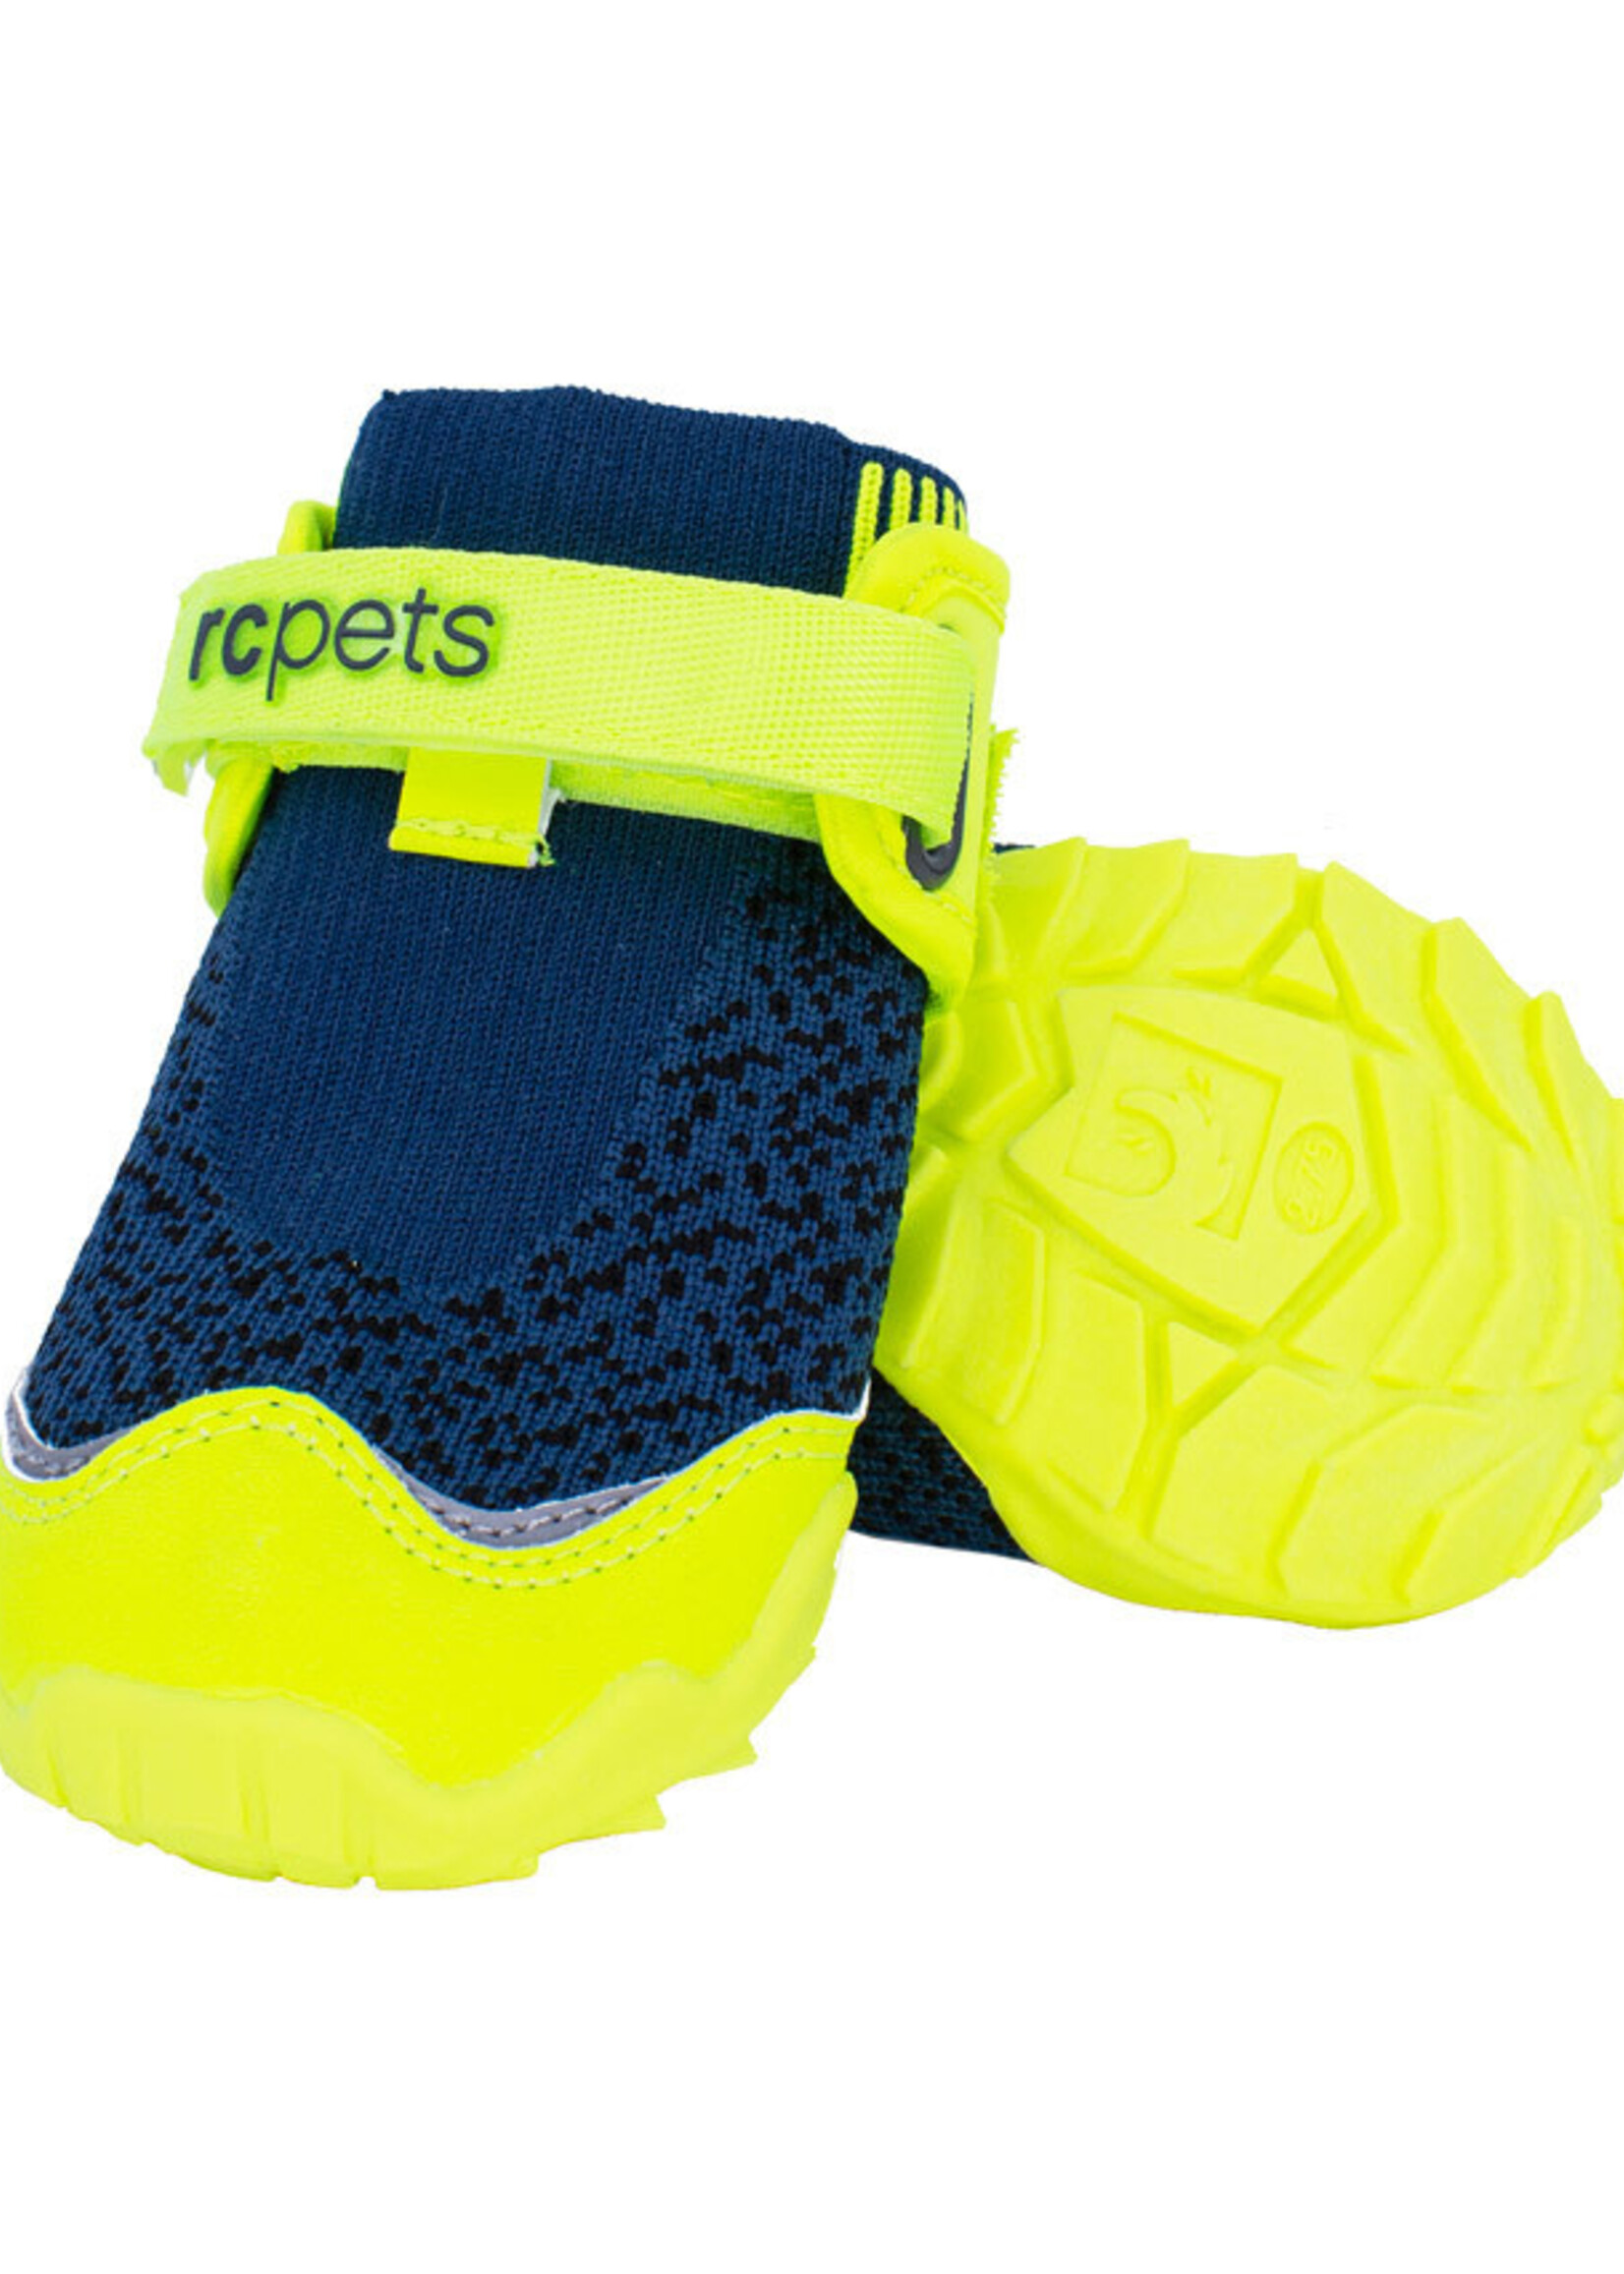 RC Pets Apex Boot - Blue/Tennis